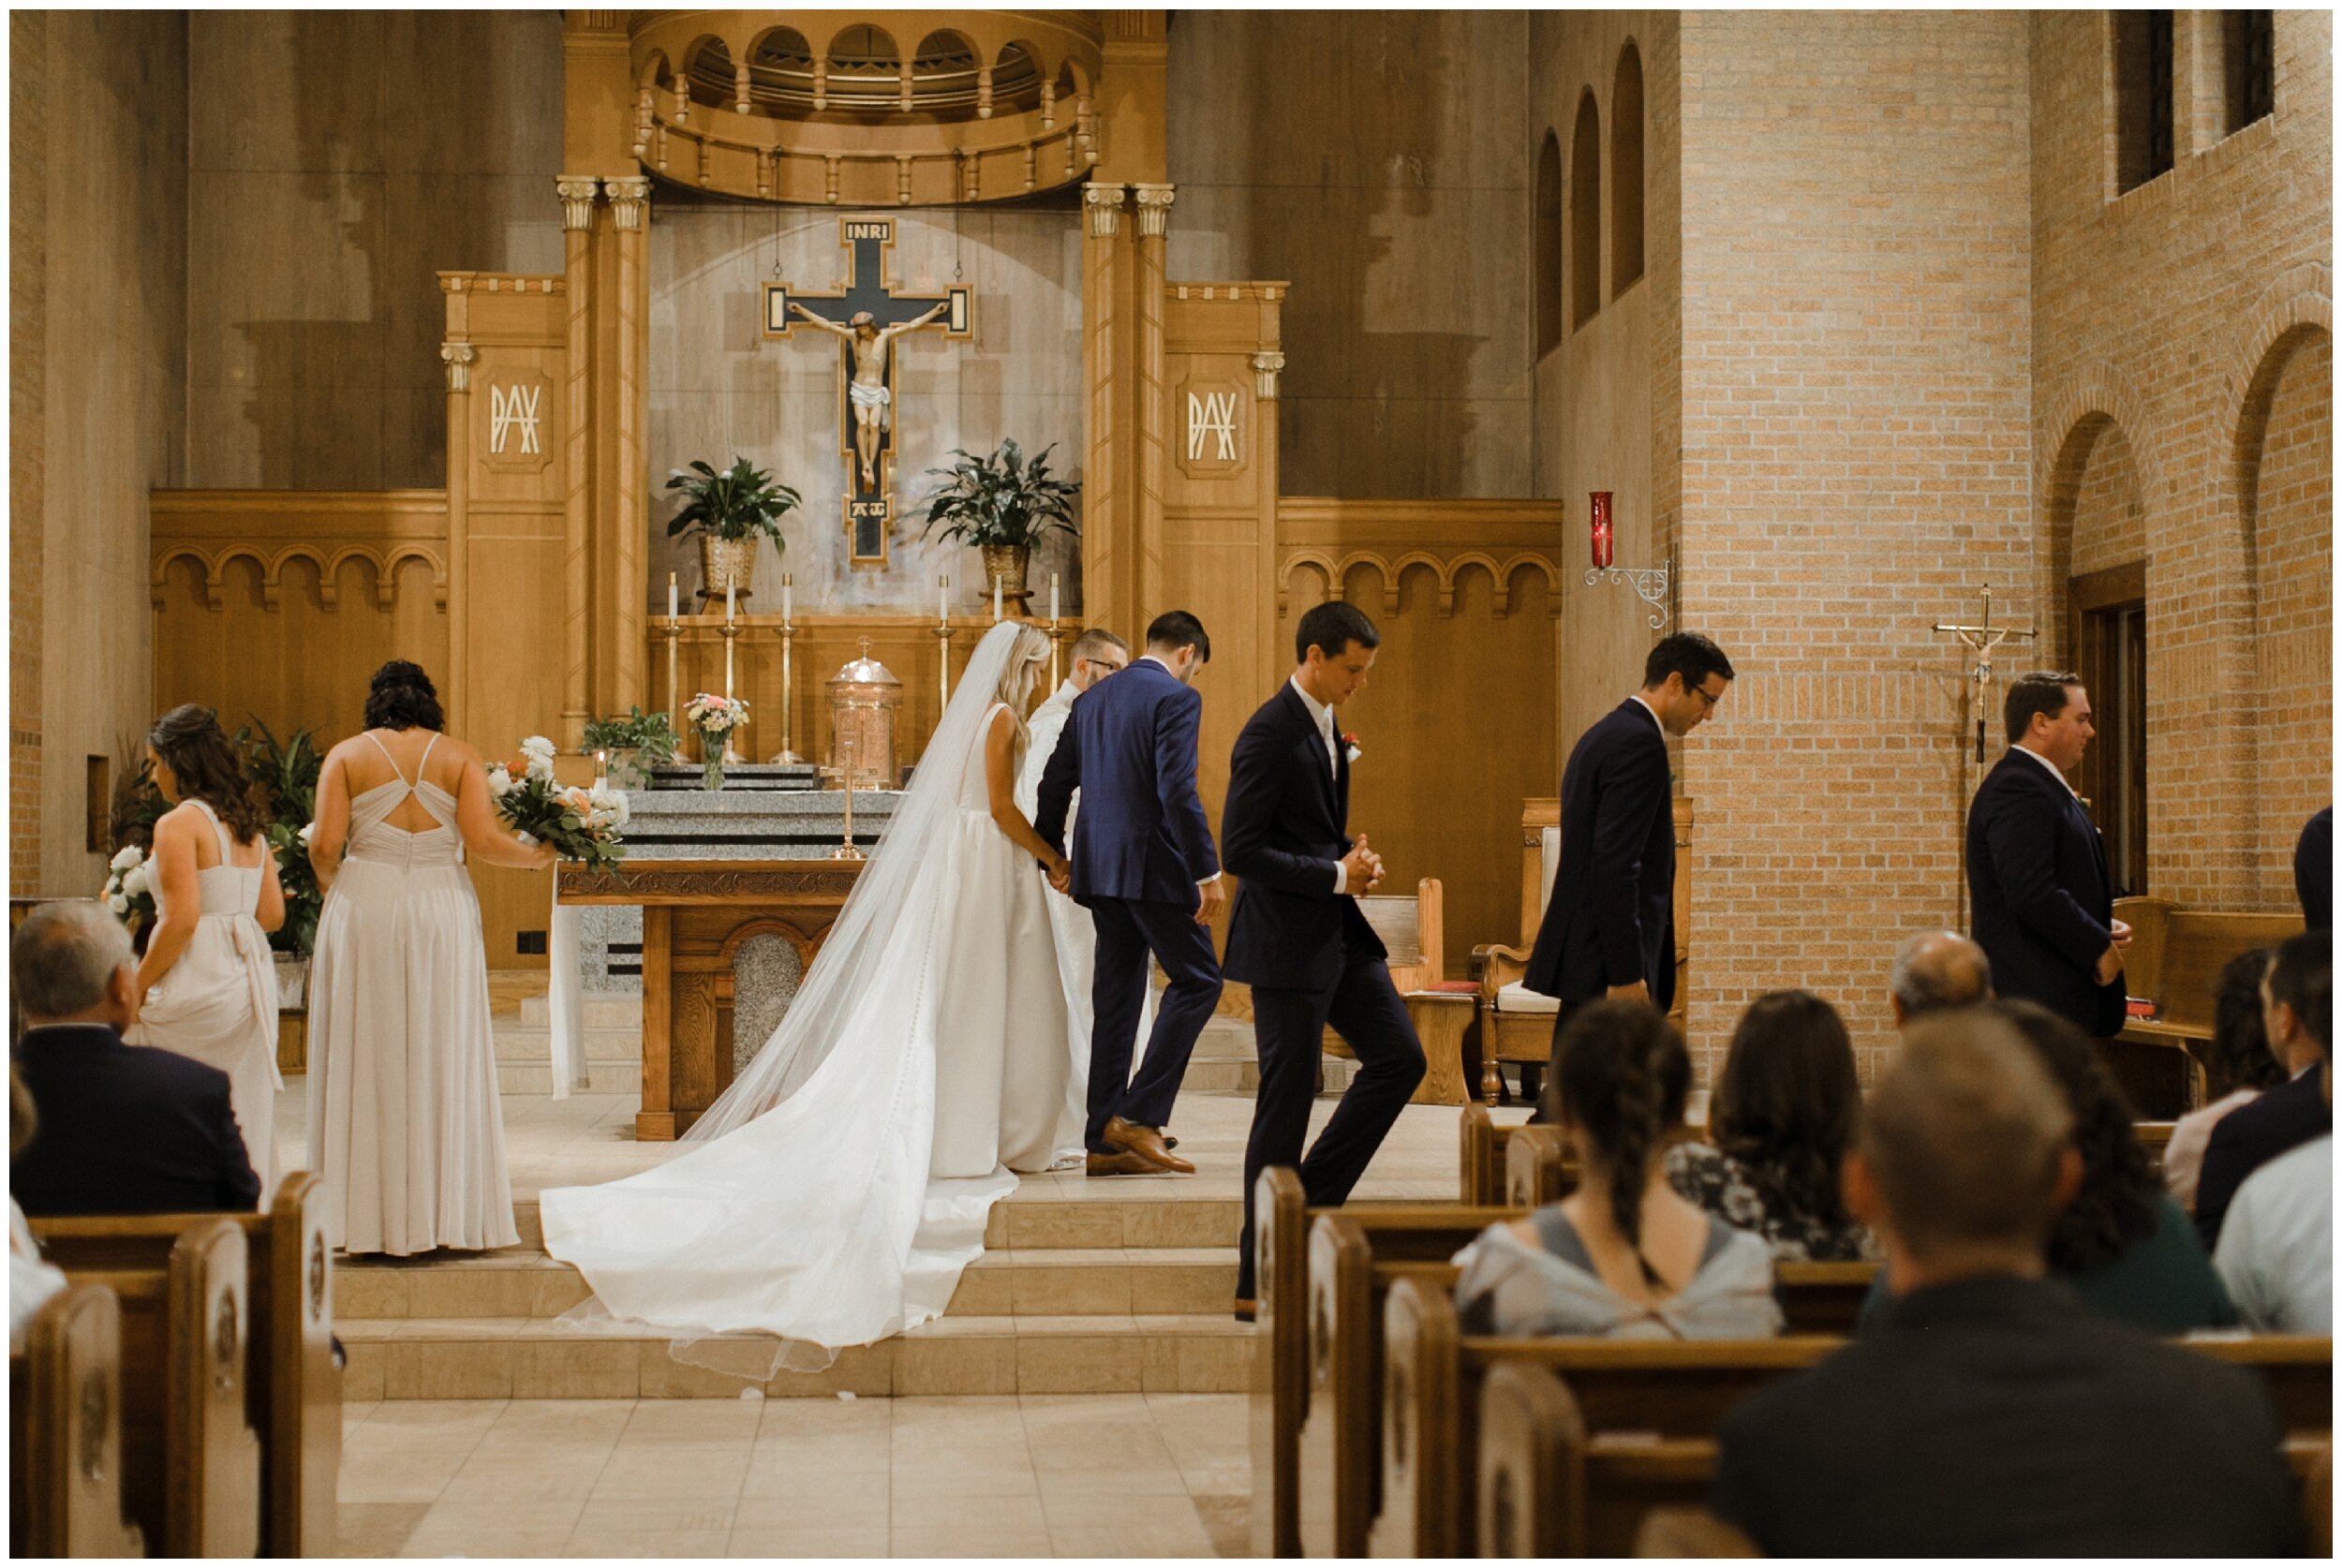 Wedding ceremony at catholic church in Brainerd, Minnesota